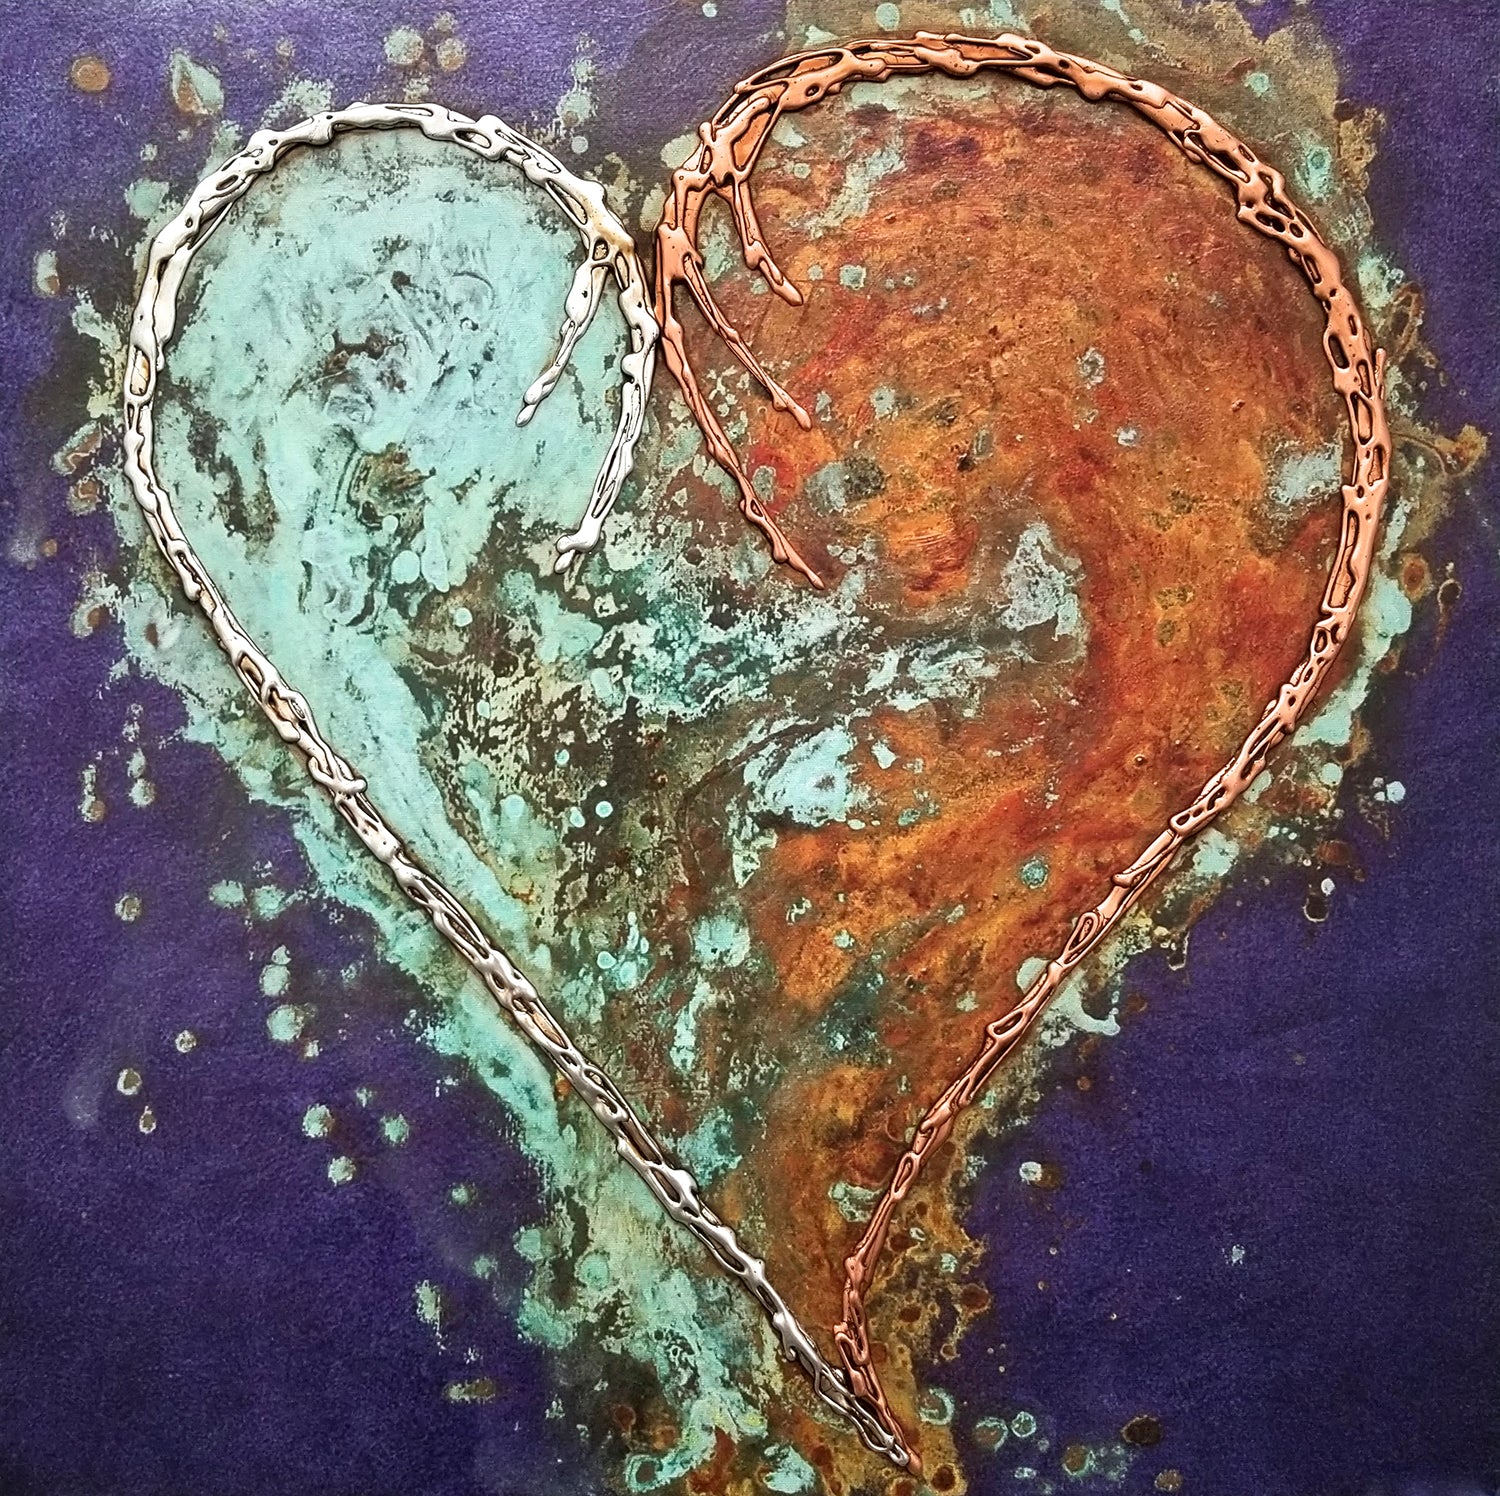 Teal Patina Heart (canvas wrap)